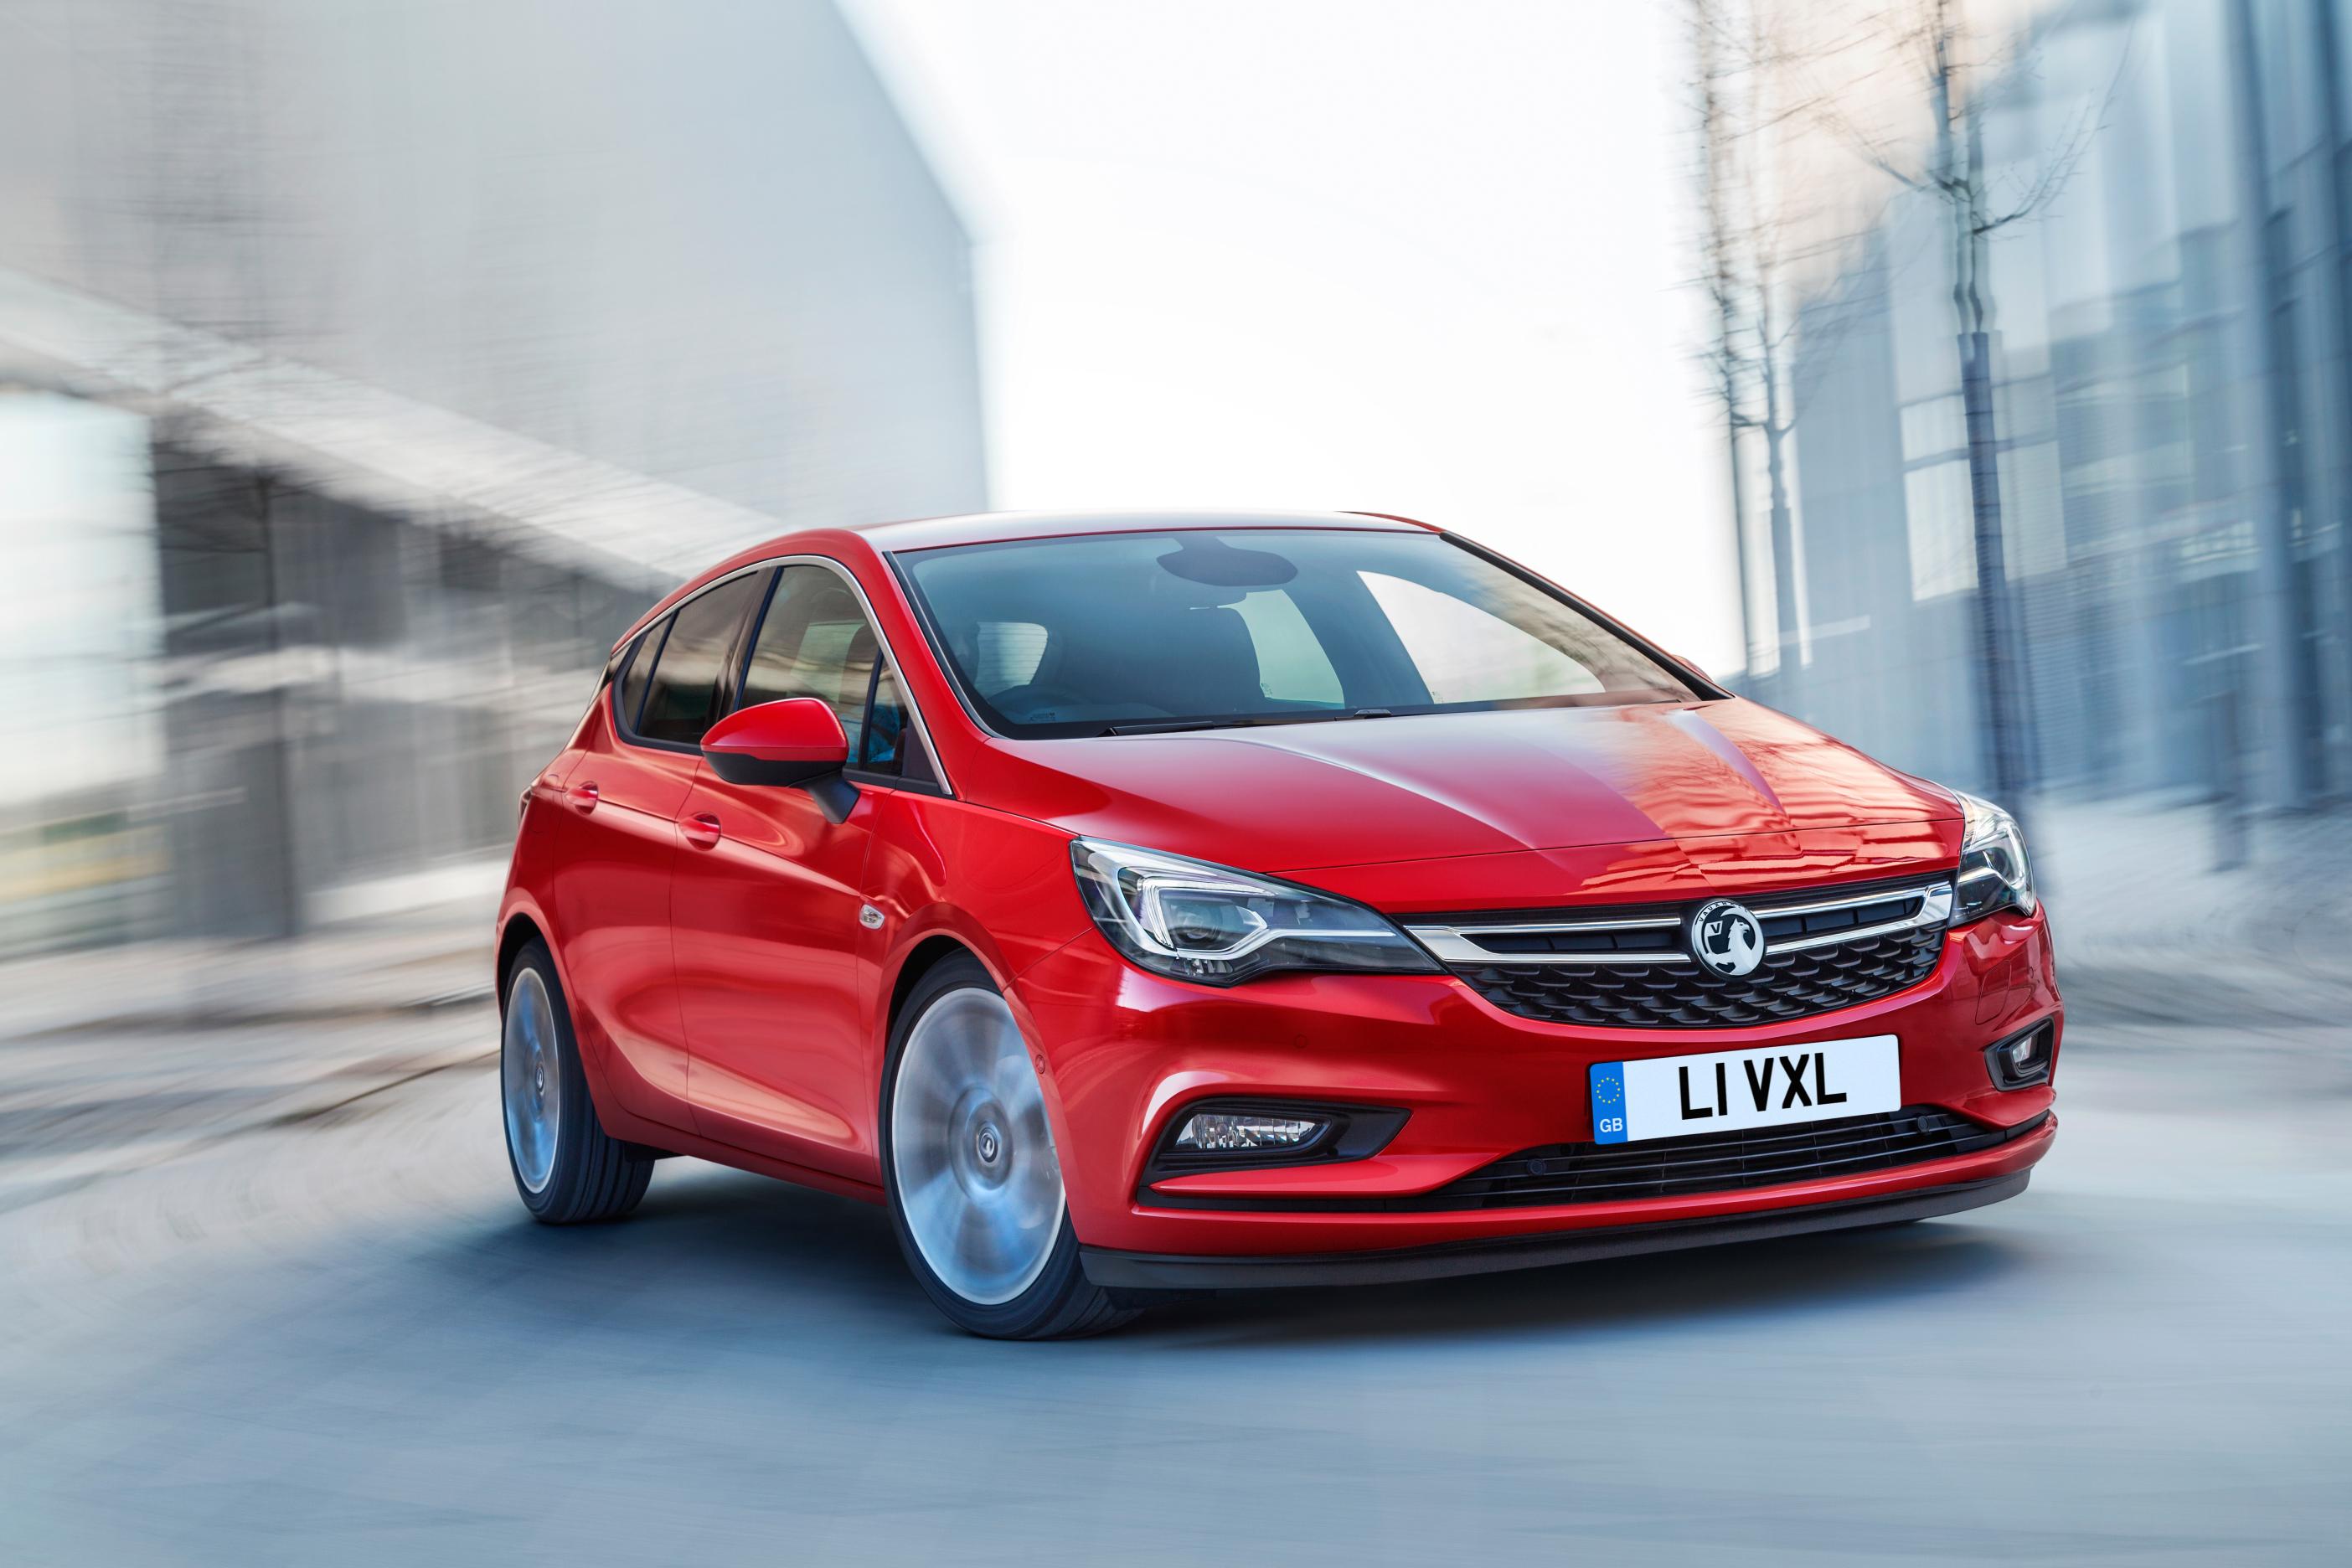 2015 Opel Astra Price: €17,960 for the 1-liter ECOTEC Turbo - autoevolution2808 x 1872